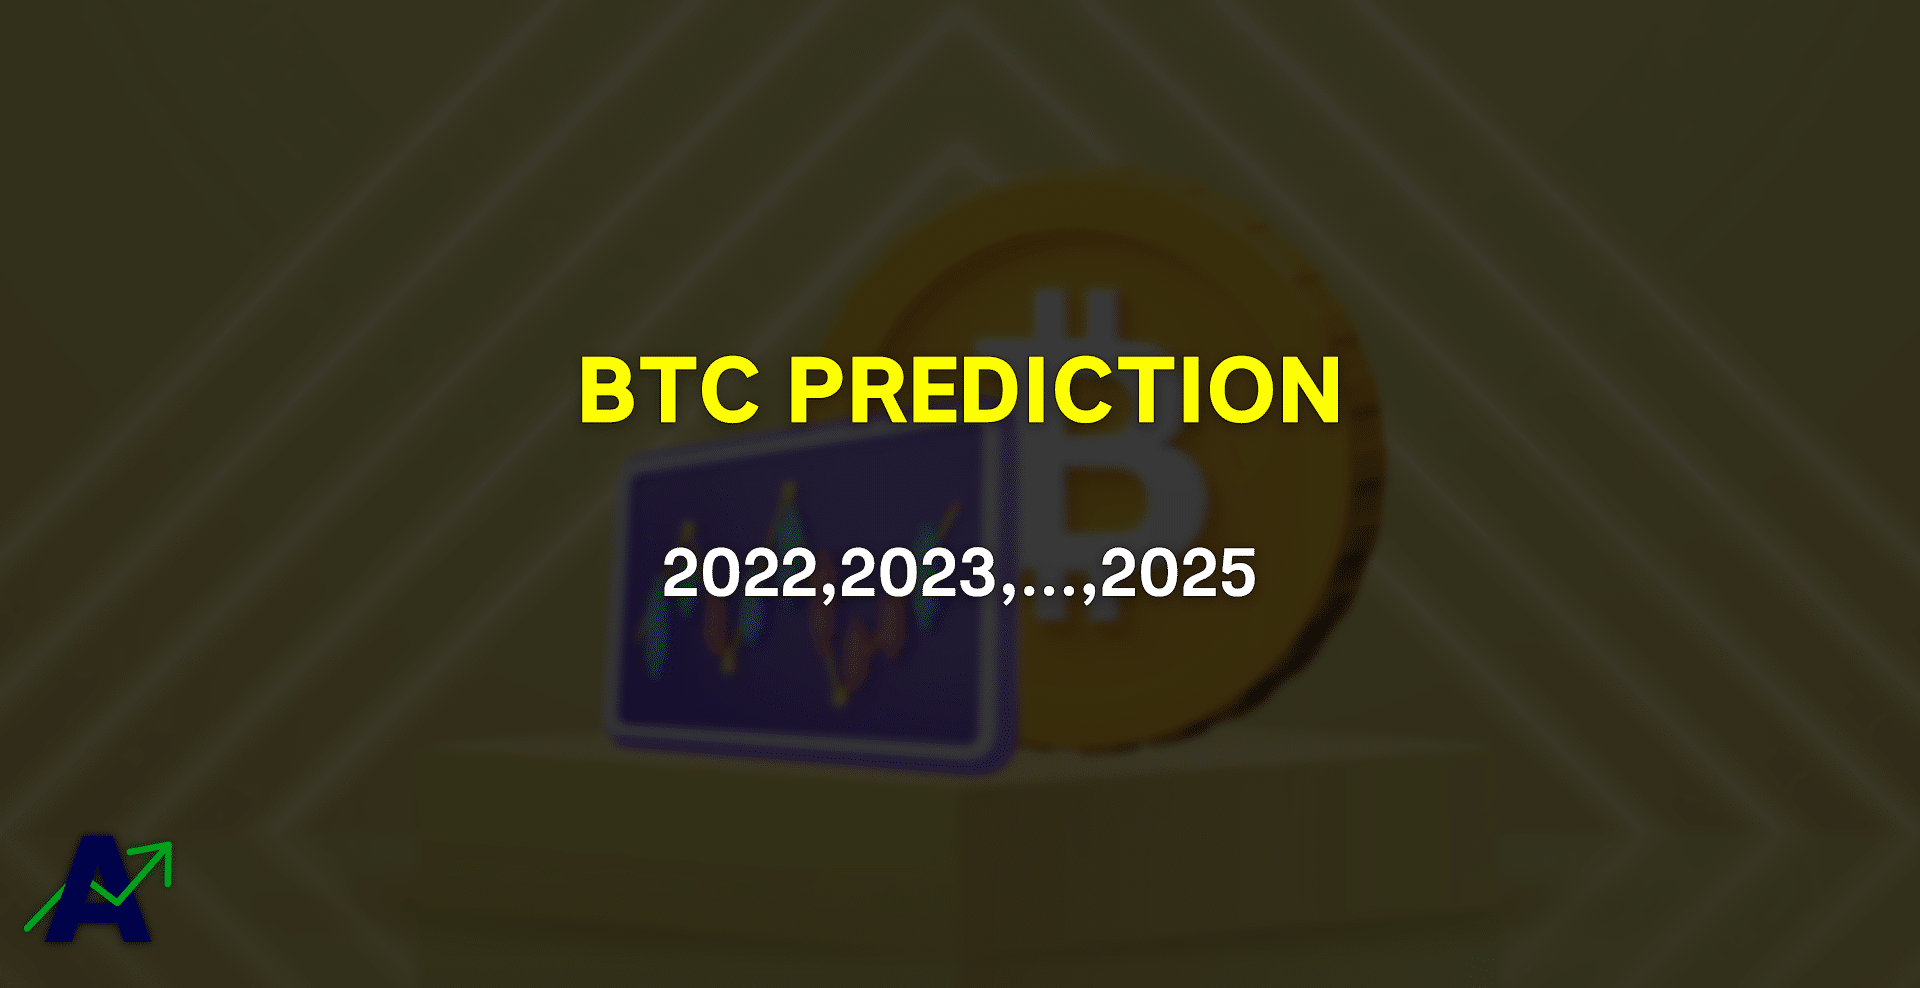 Bitcoin Price Prediction For 2022, 2023, 2024 - 2025